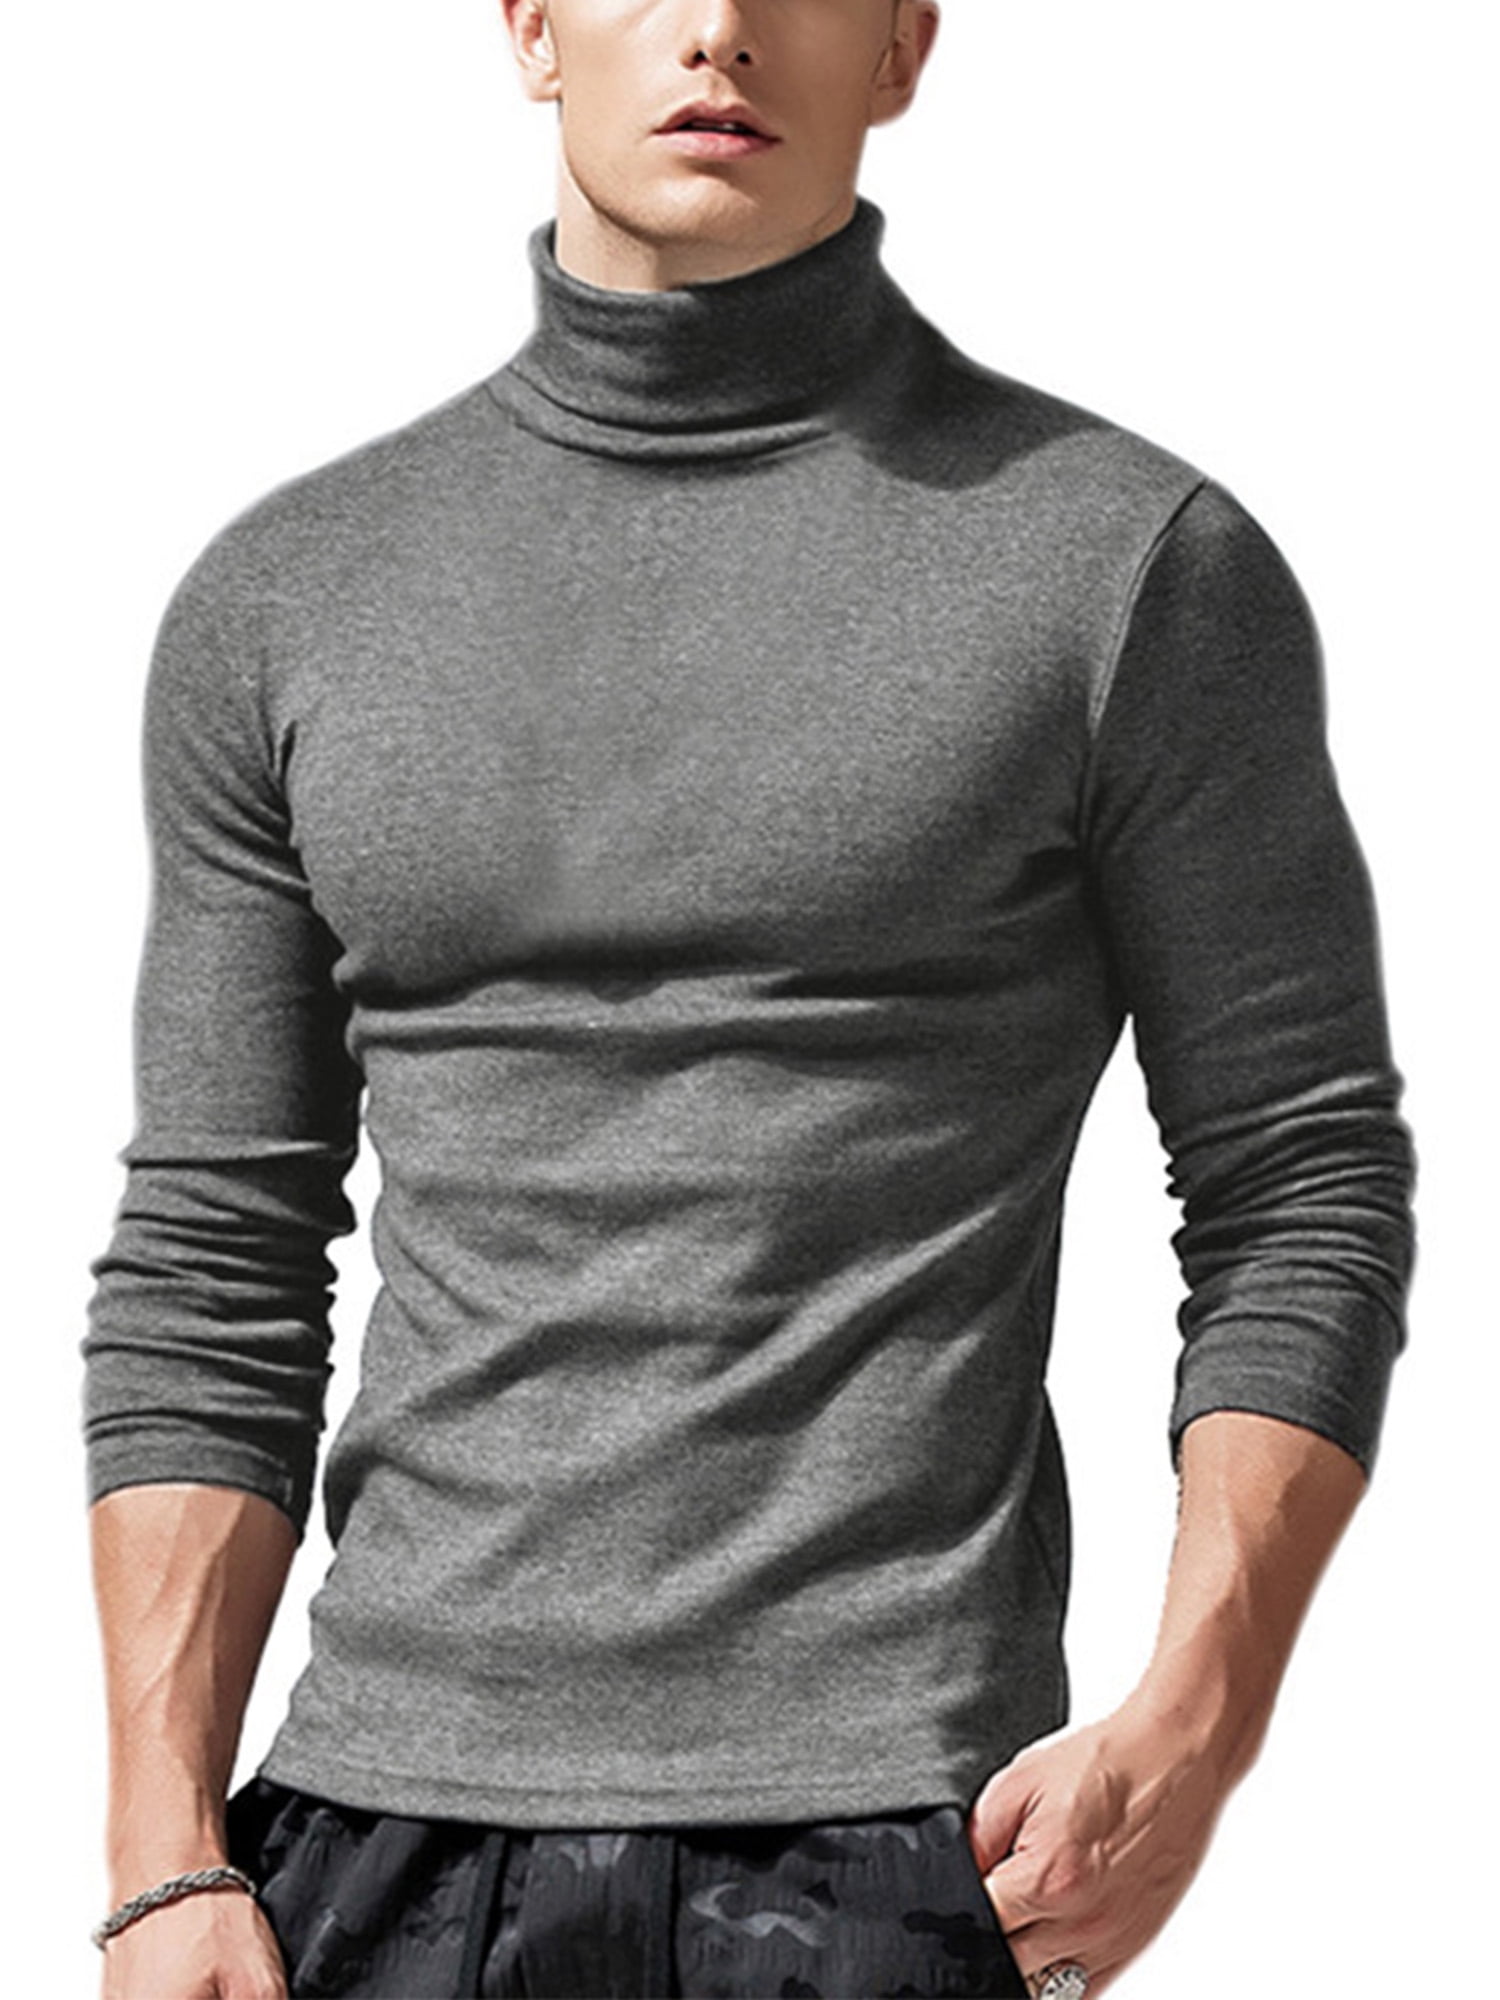 Long Sleeve Shirt for Men Winter Turtleneck Basic Top Thermal Mock